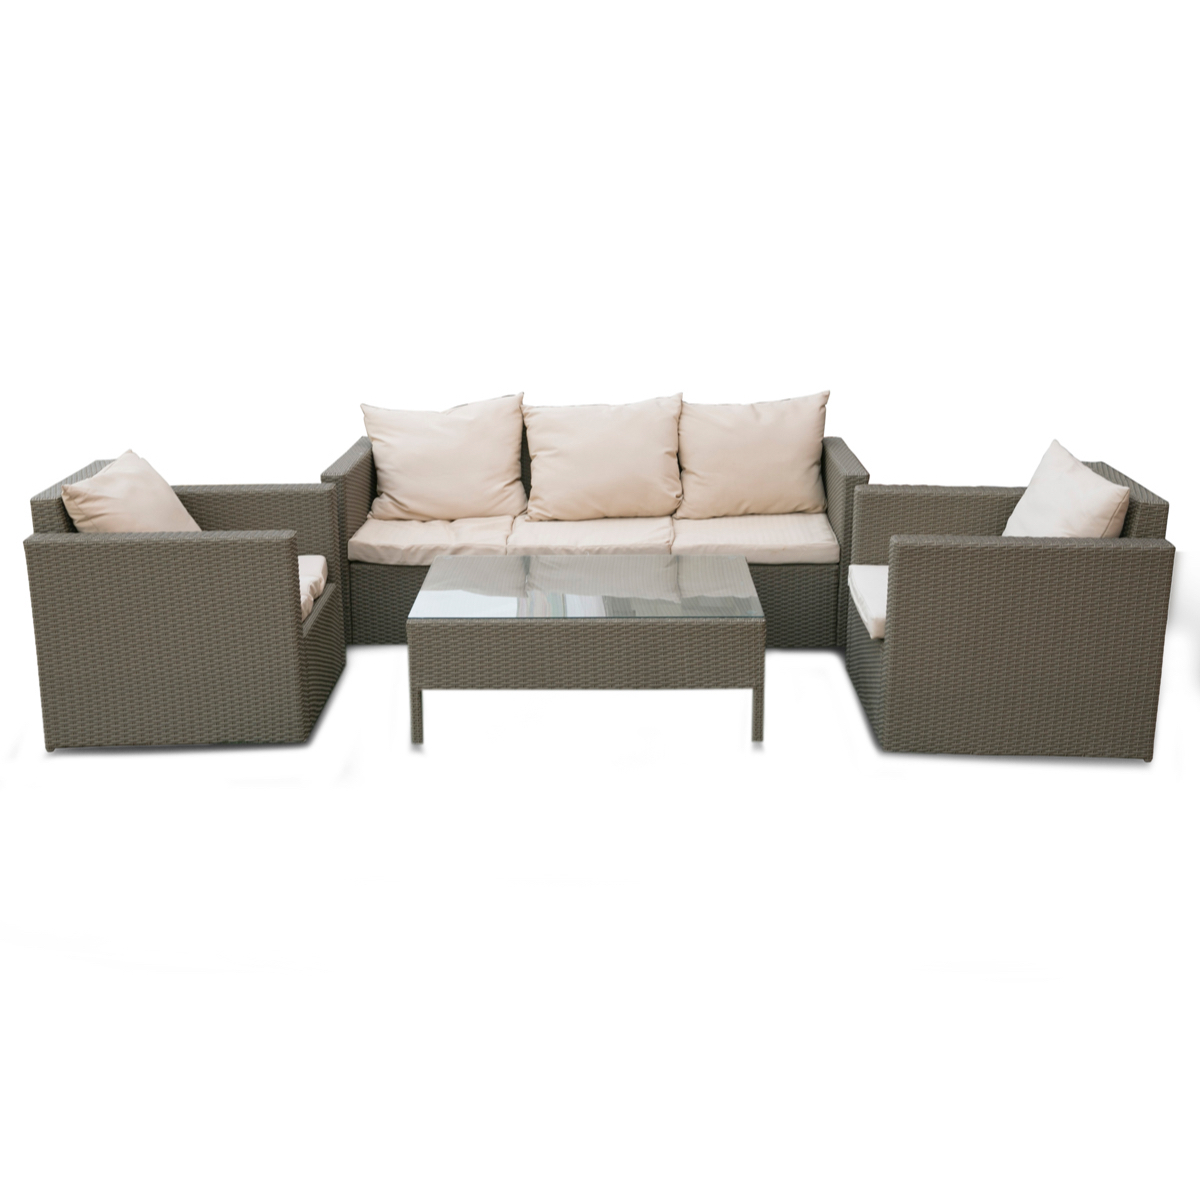 Homeworks 5-Seater Wicker Sofa Set (Brown)